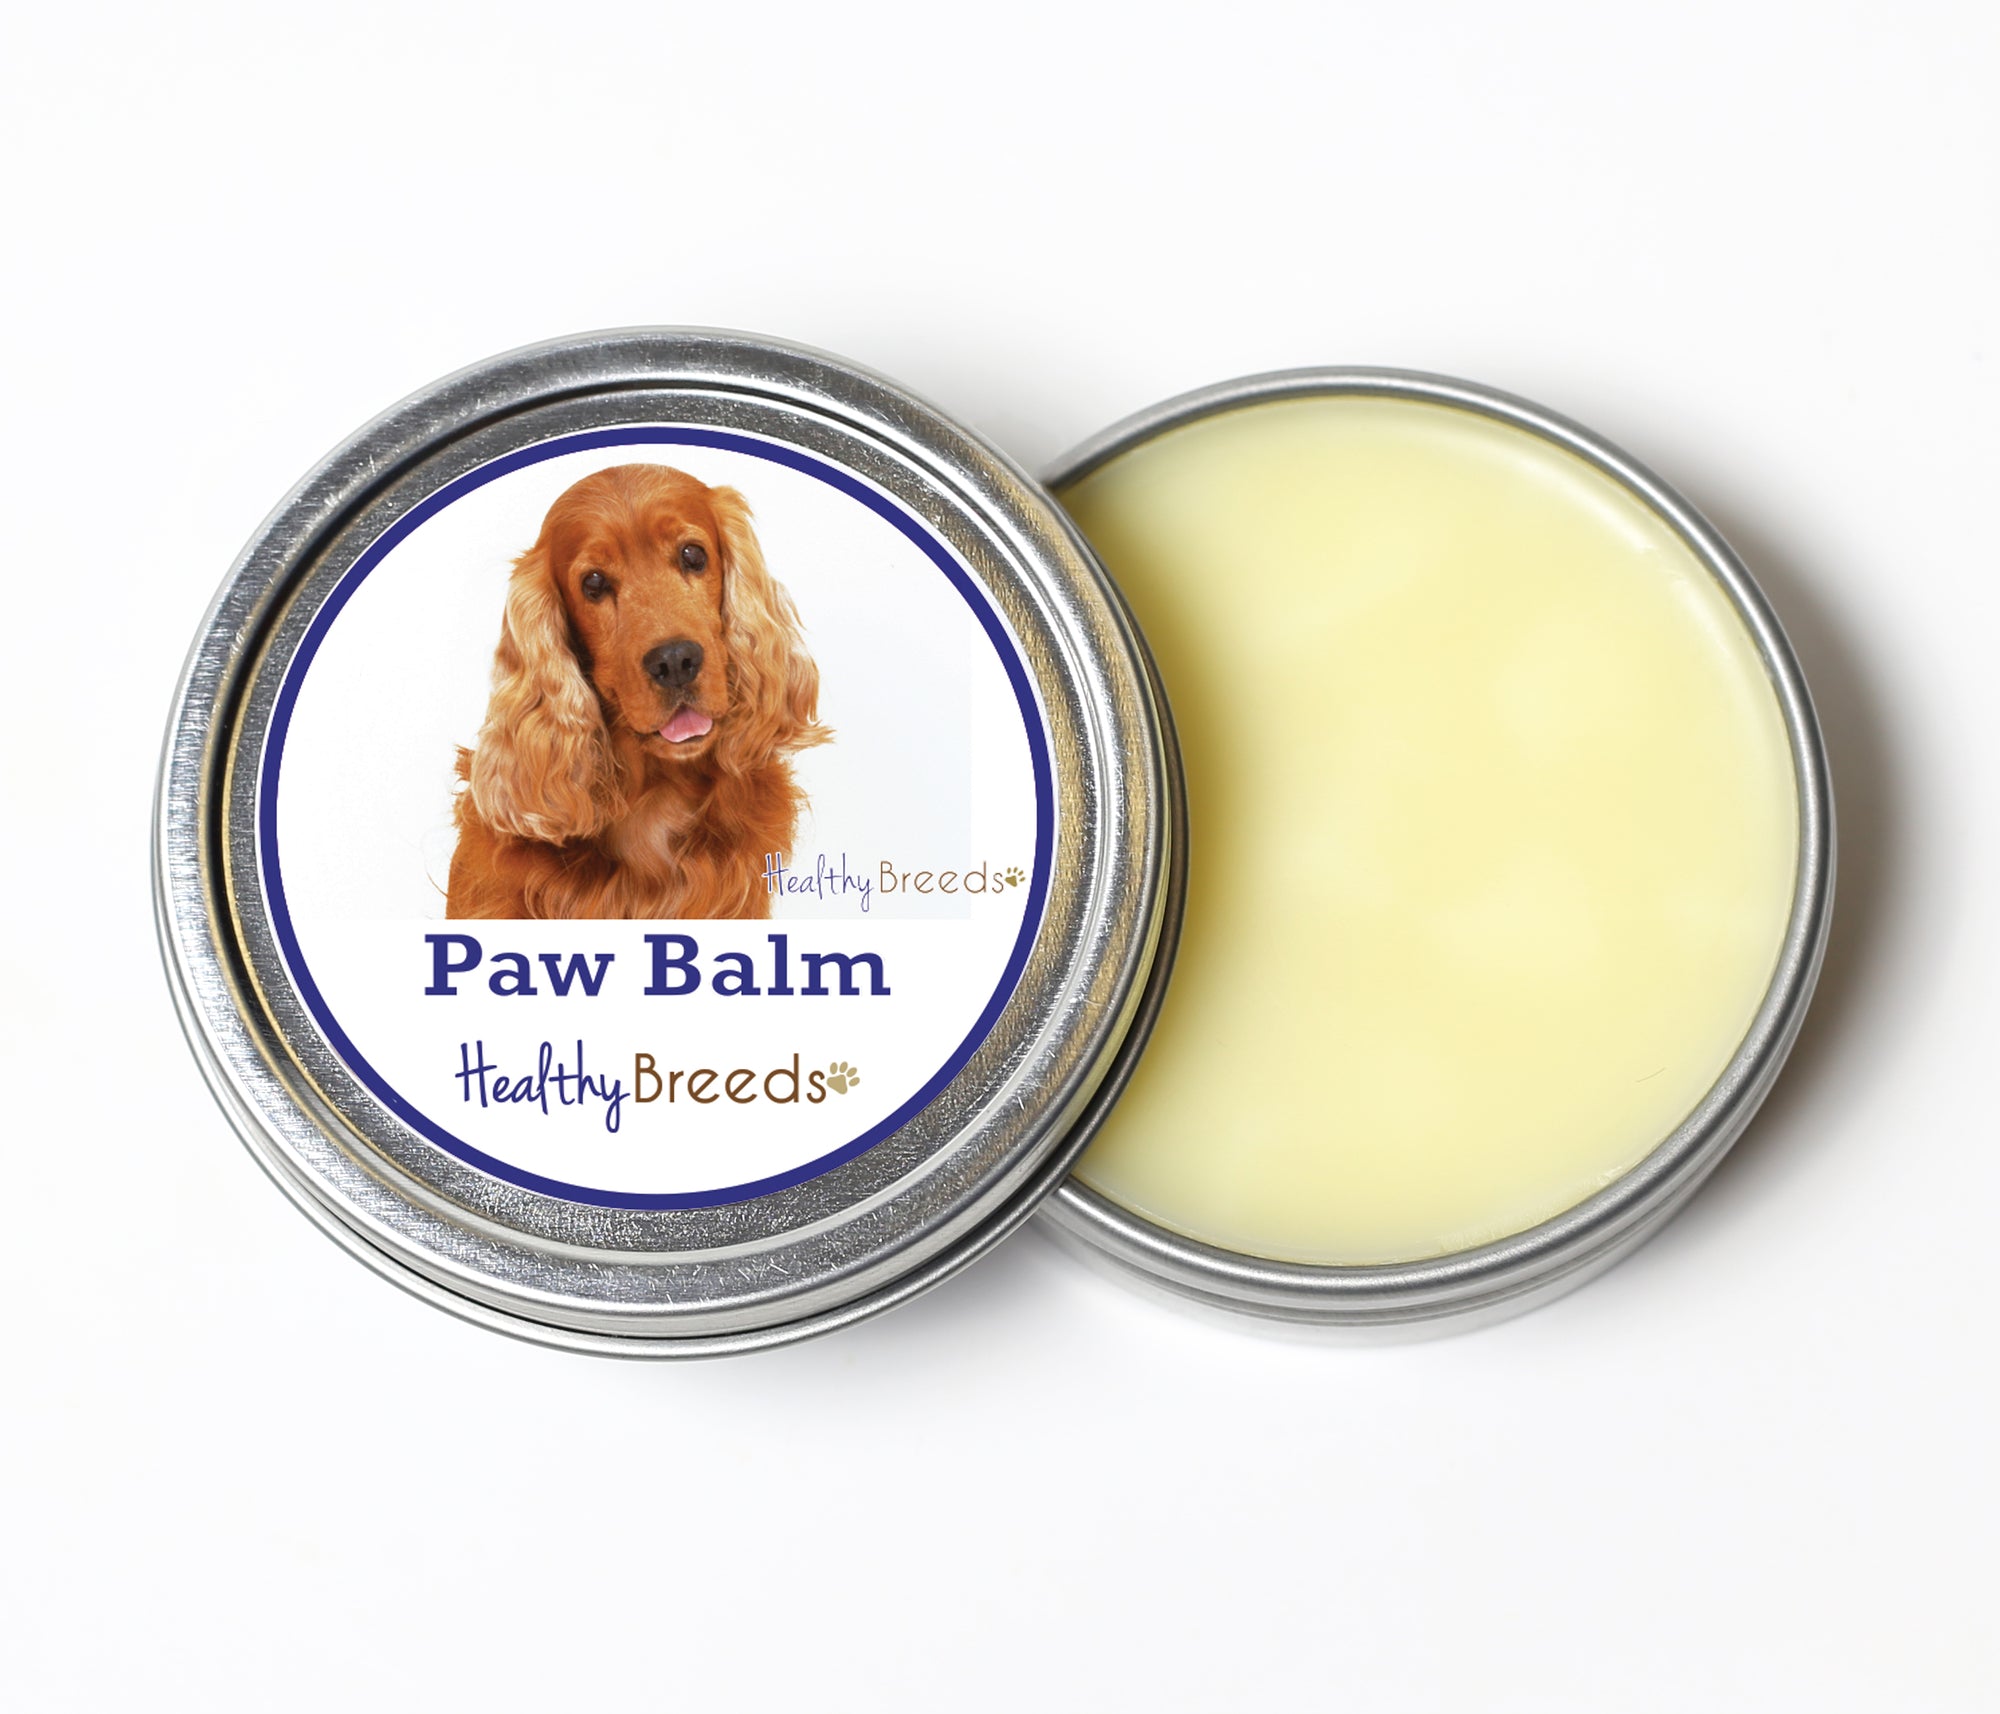 Healthy Breeds Cocker Spaniel Dog Paw Balm 2 oz